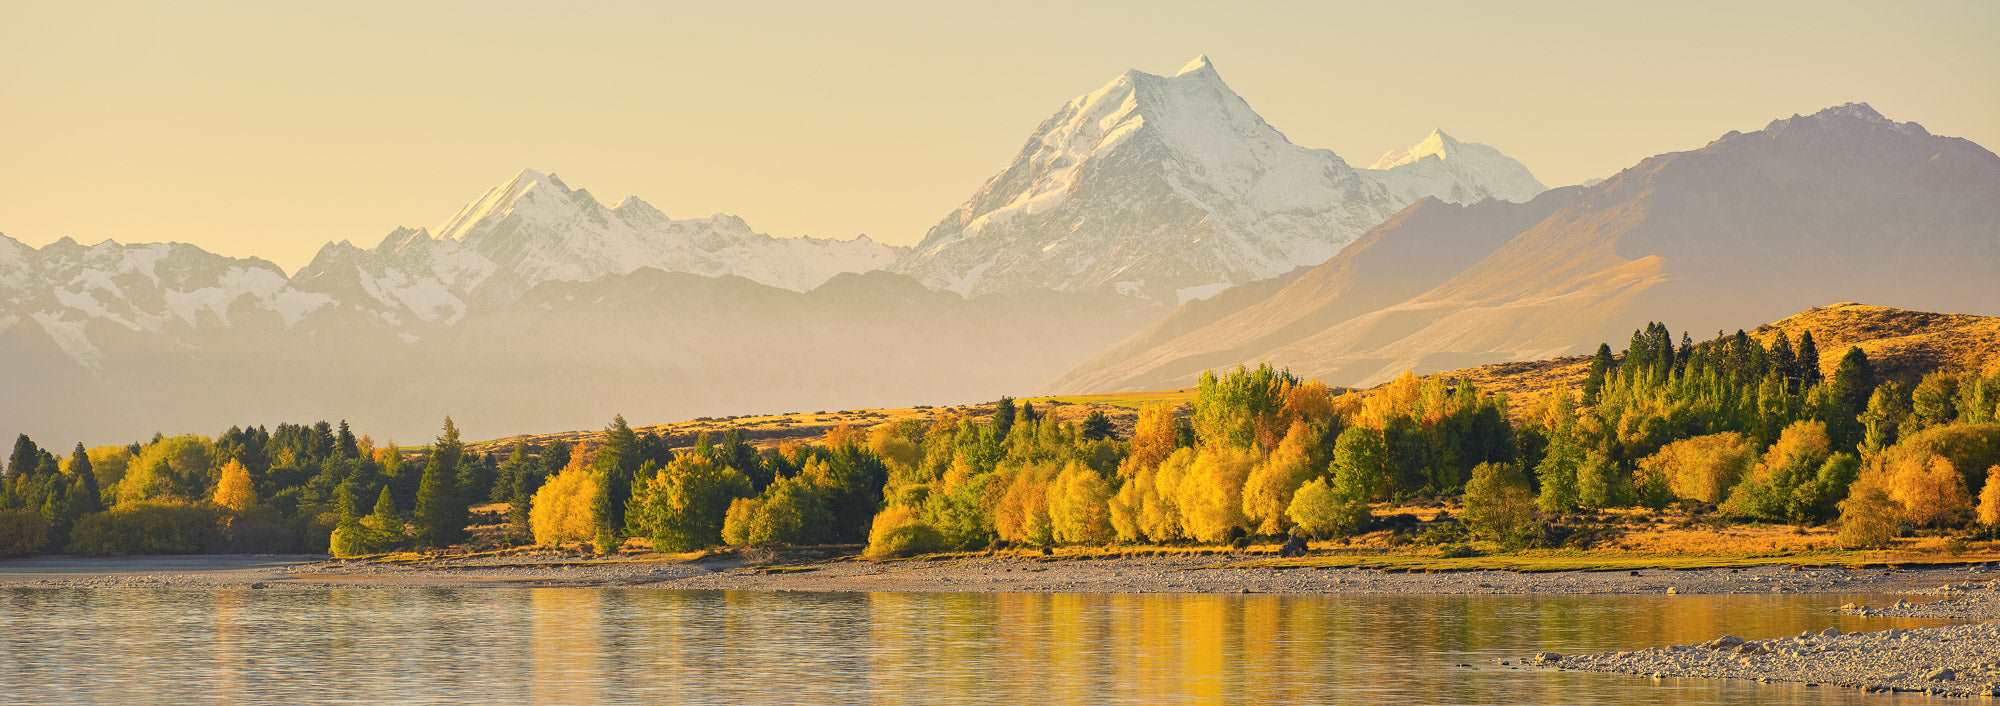 Golden Peaks - Mount Cook - by Award Winning New Zealand Landscape Photographer Stephen Milner